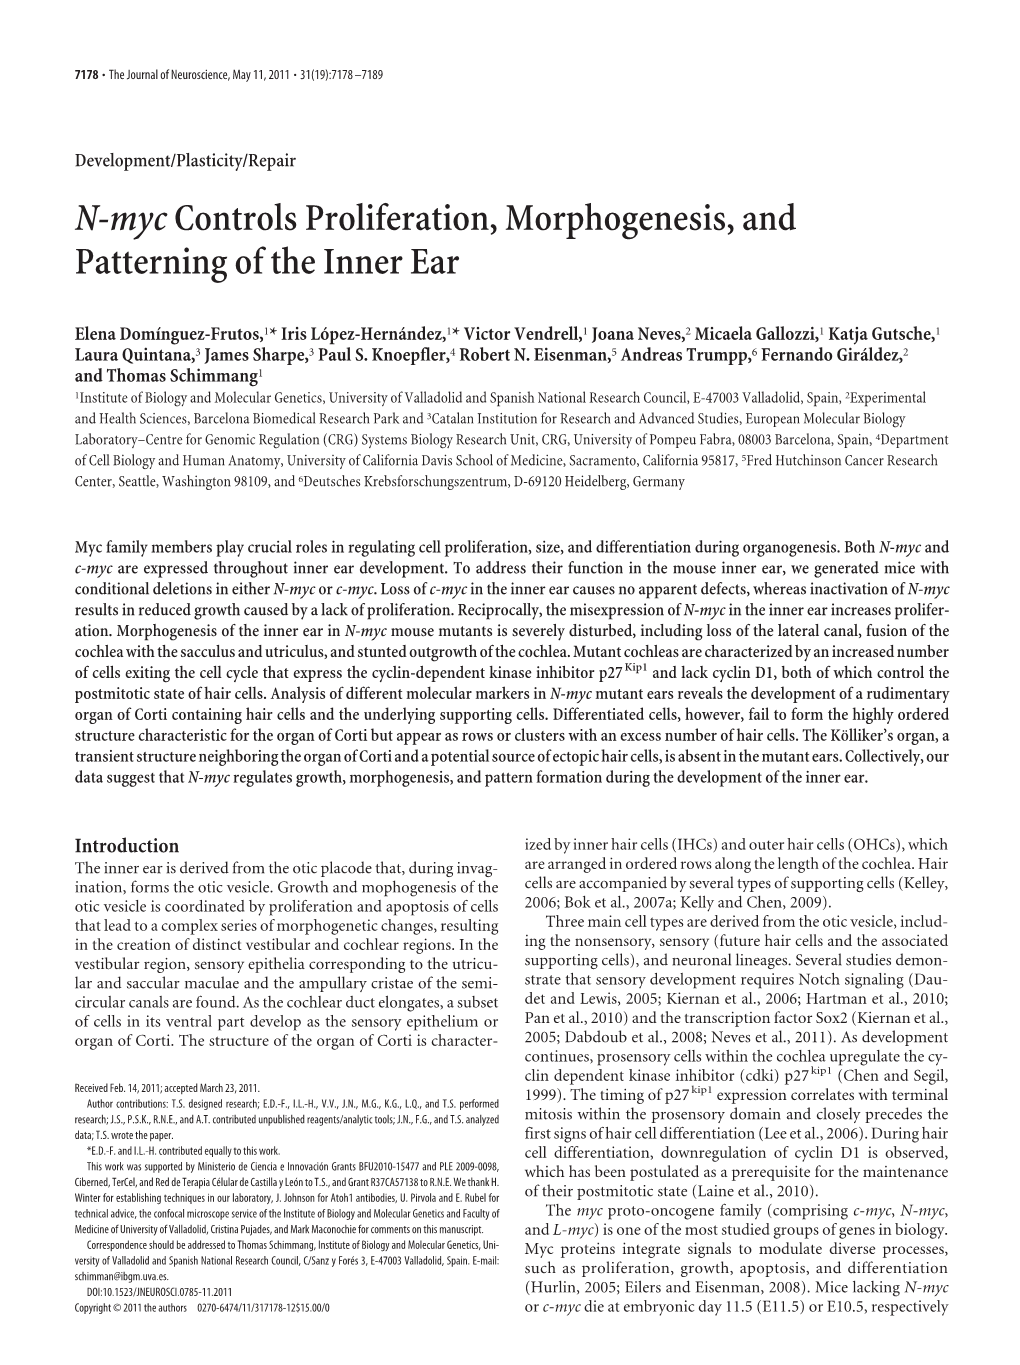 N-Myccontrols Proliferation, Morphogenesis, and Patterning of the Inner